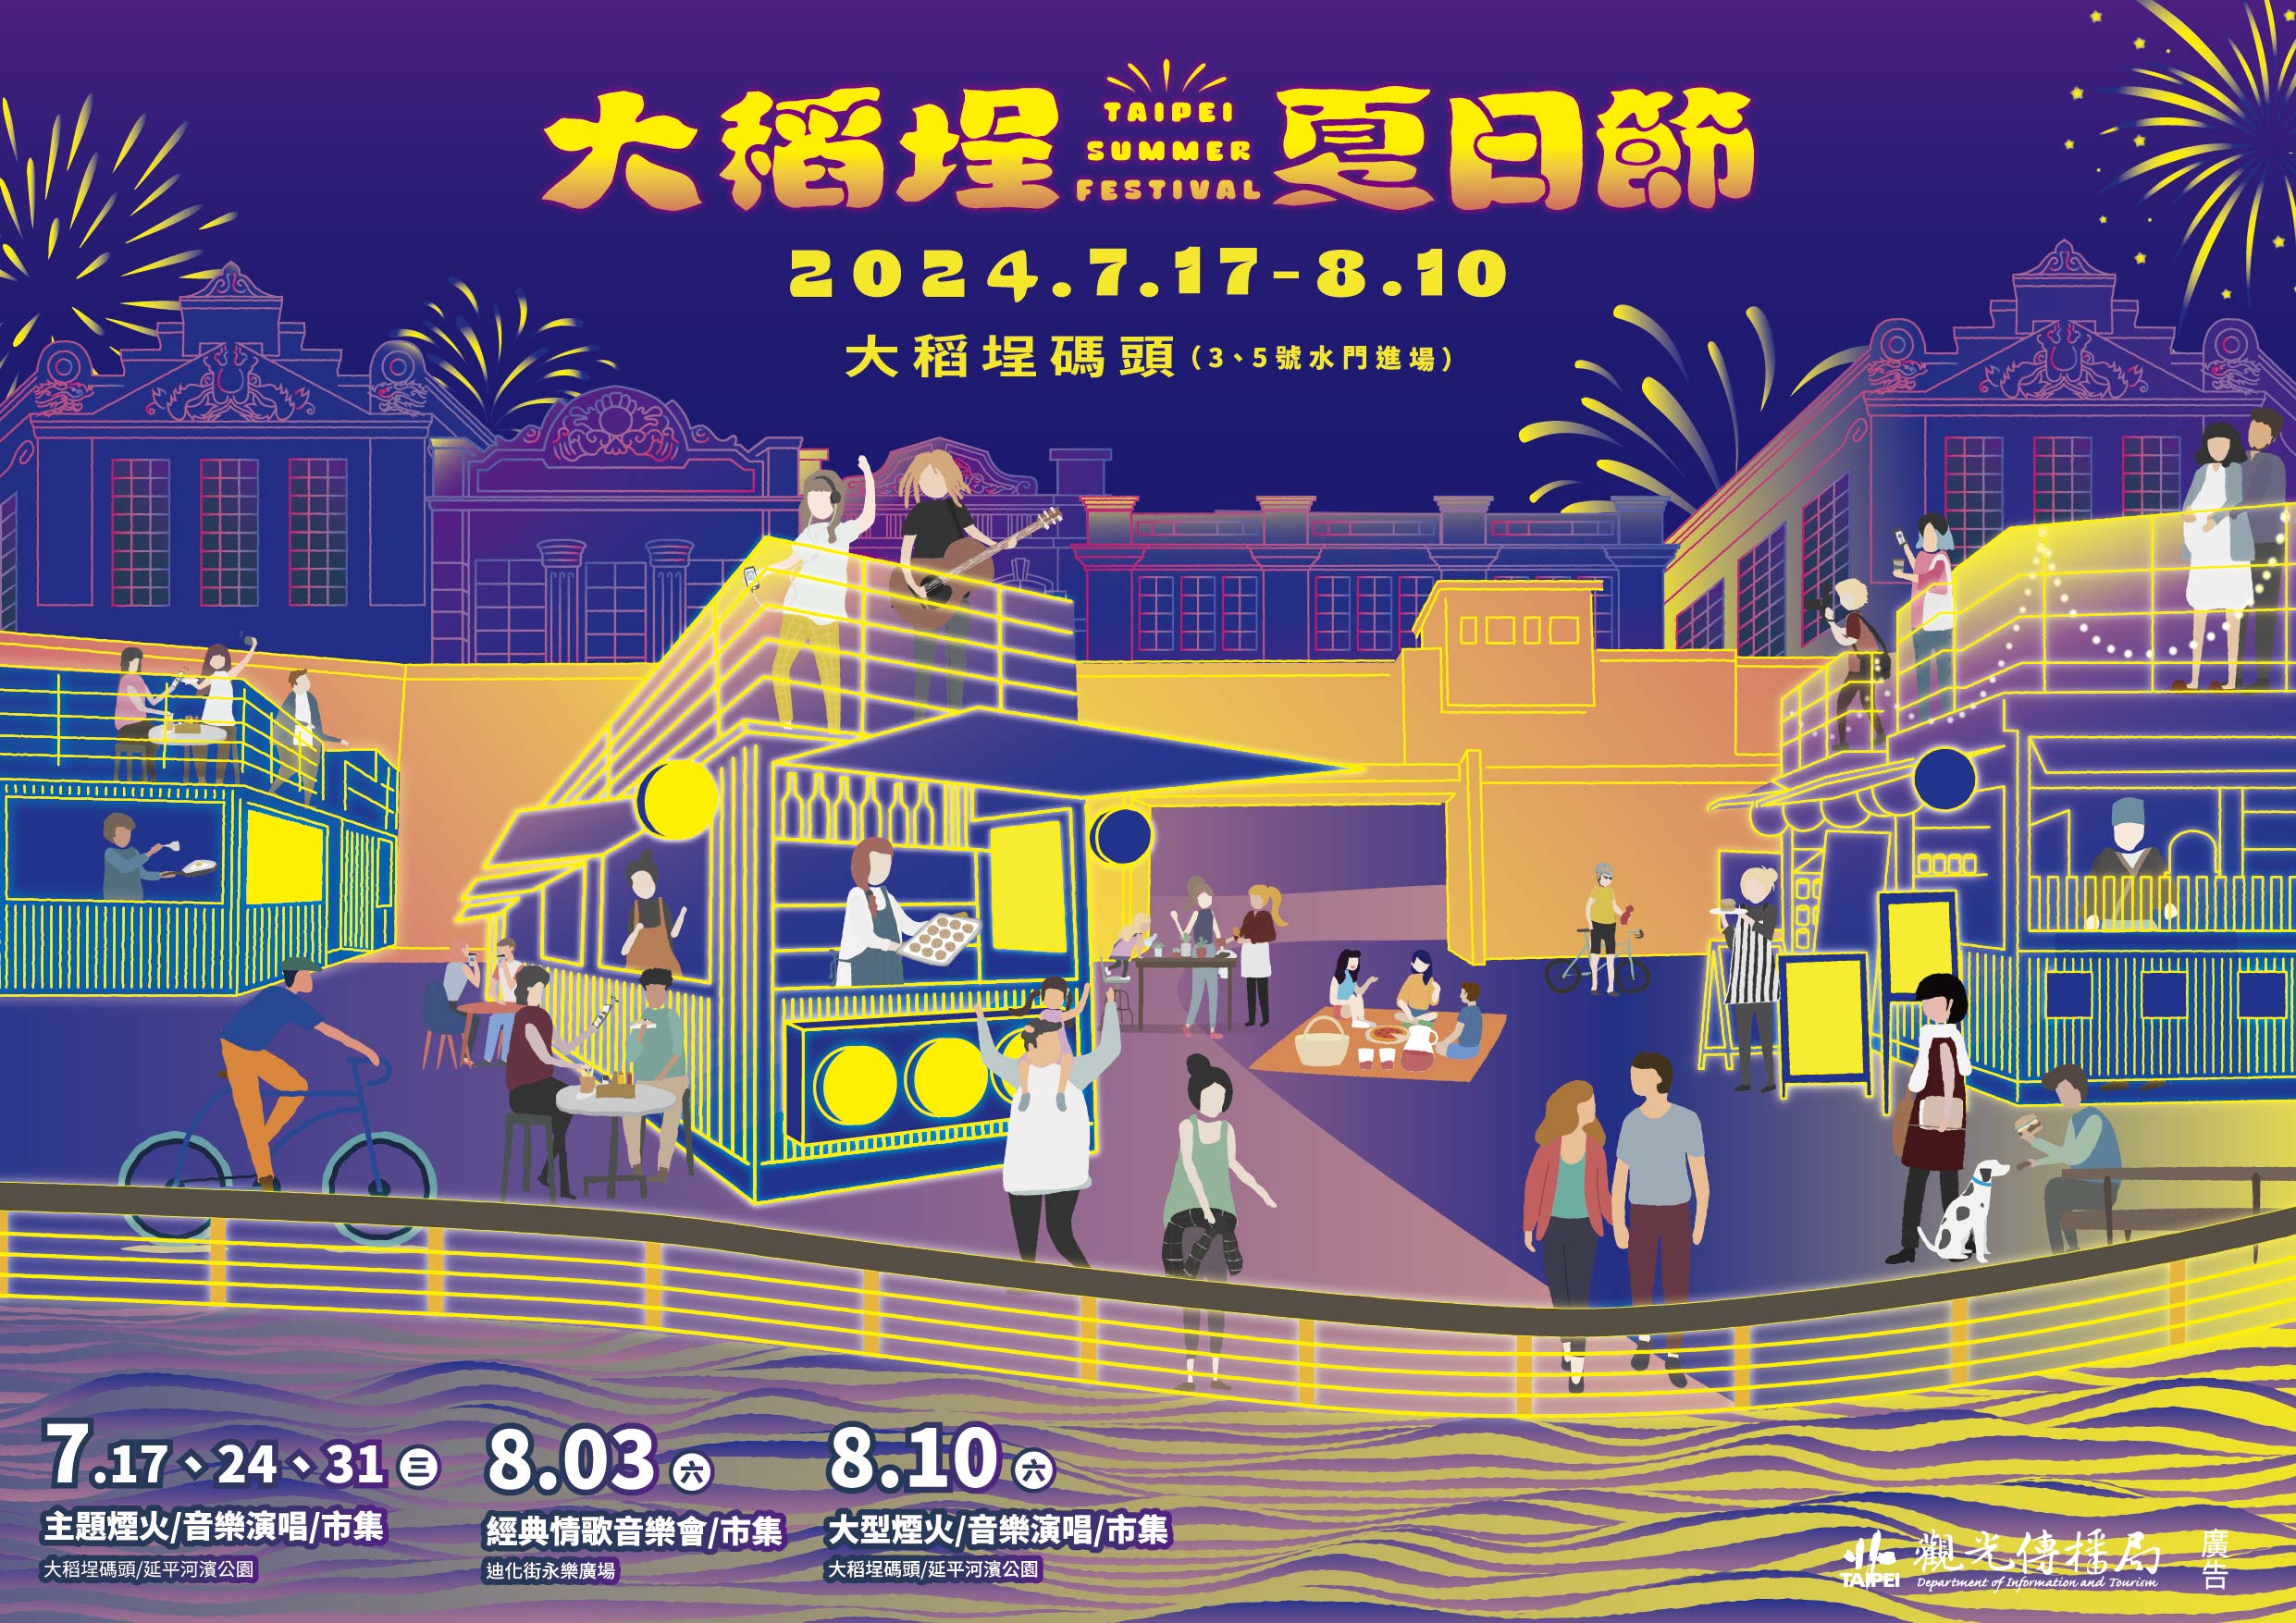 【大稻埕夏日節 Taipei Summer Festival】期間の宿泊特典